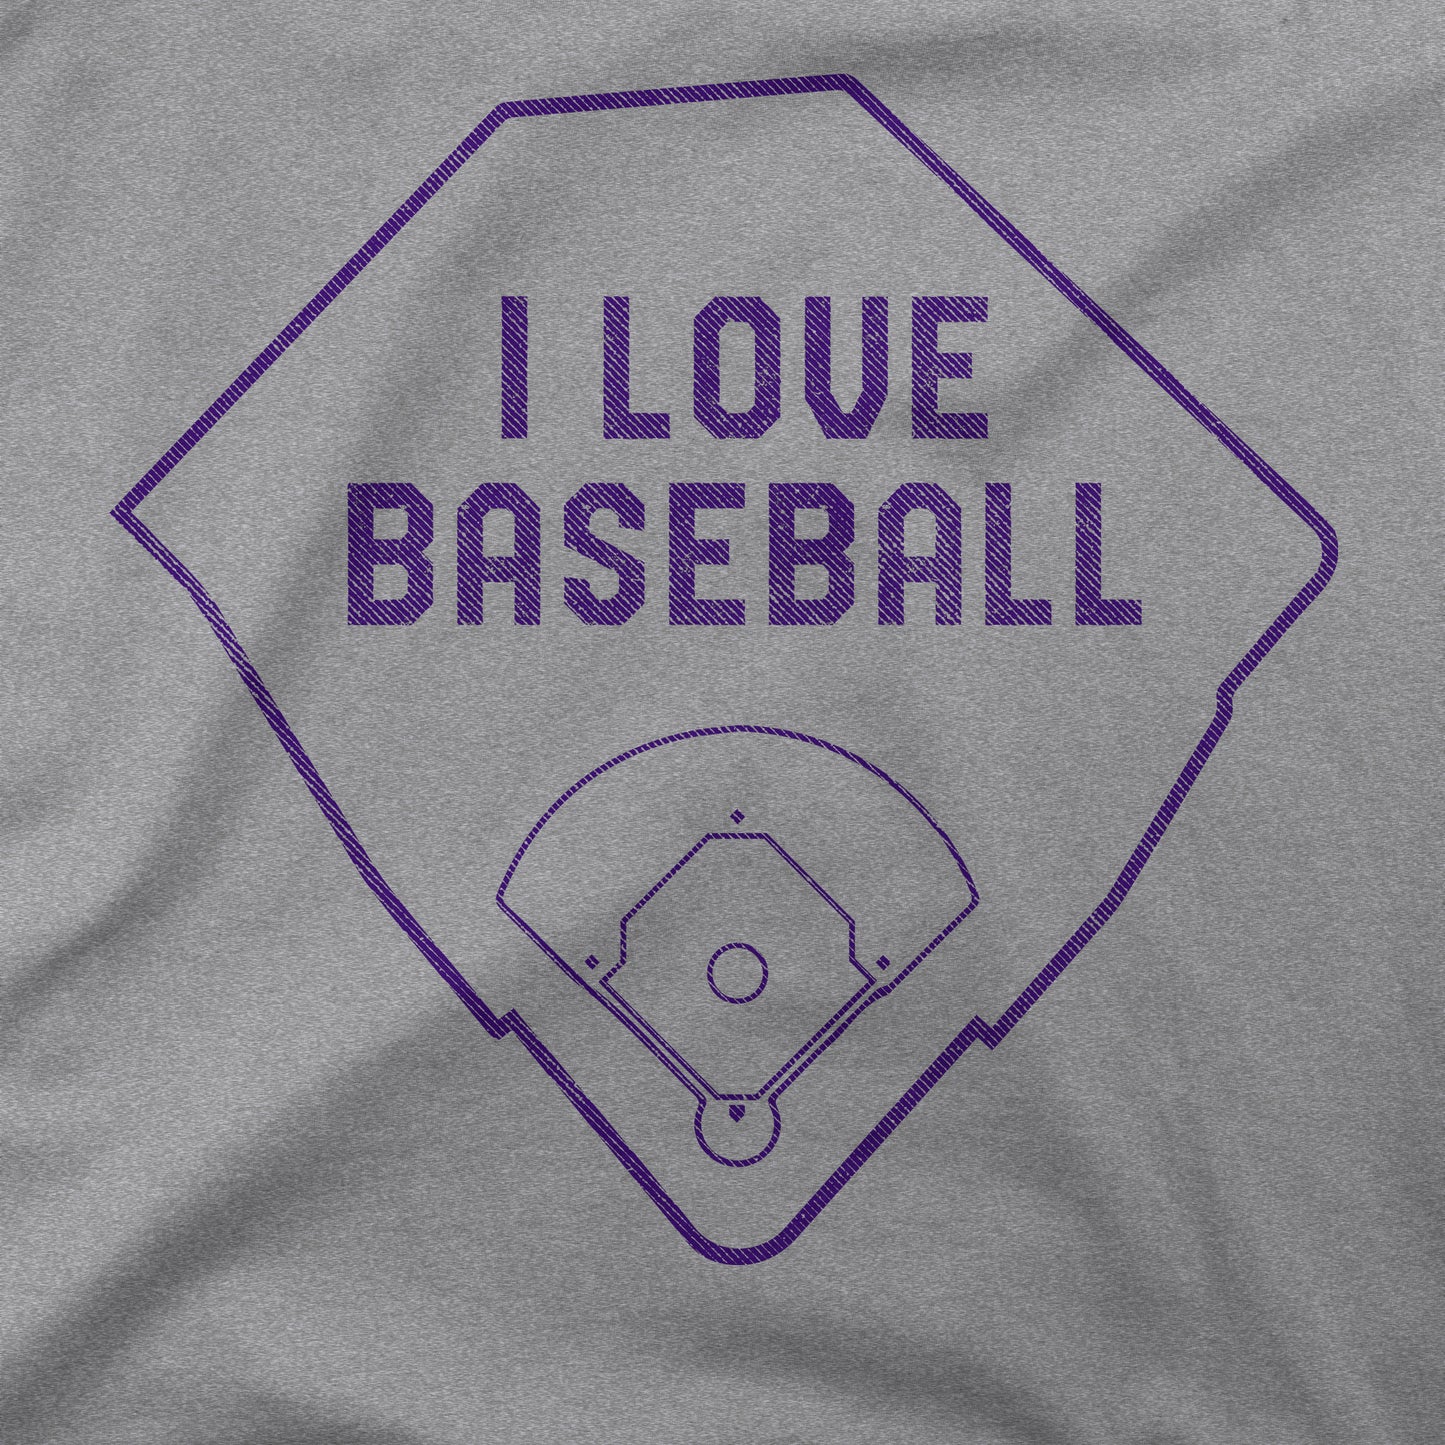 I Love Baseball '22 | Colorado | T-Shirt